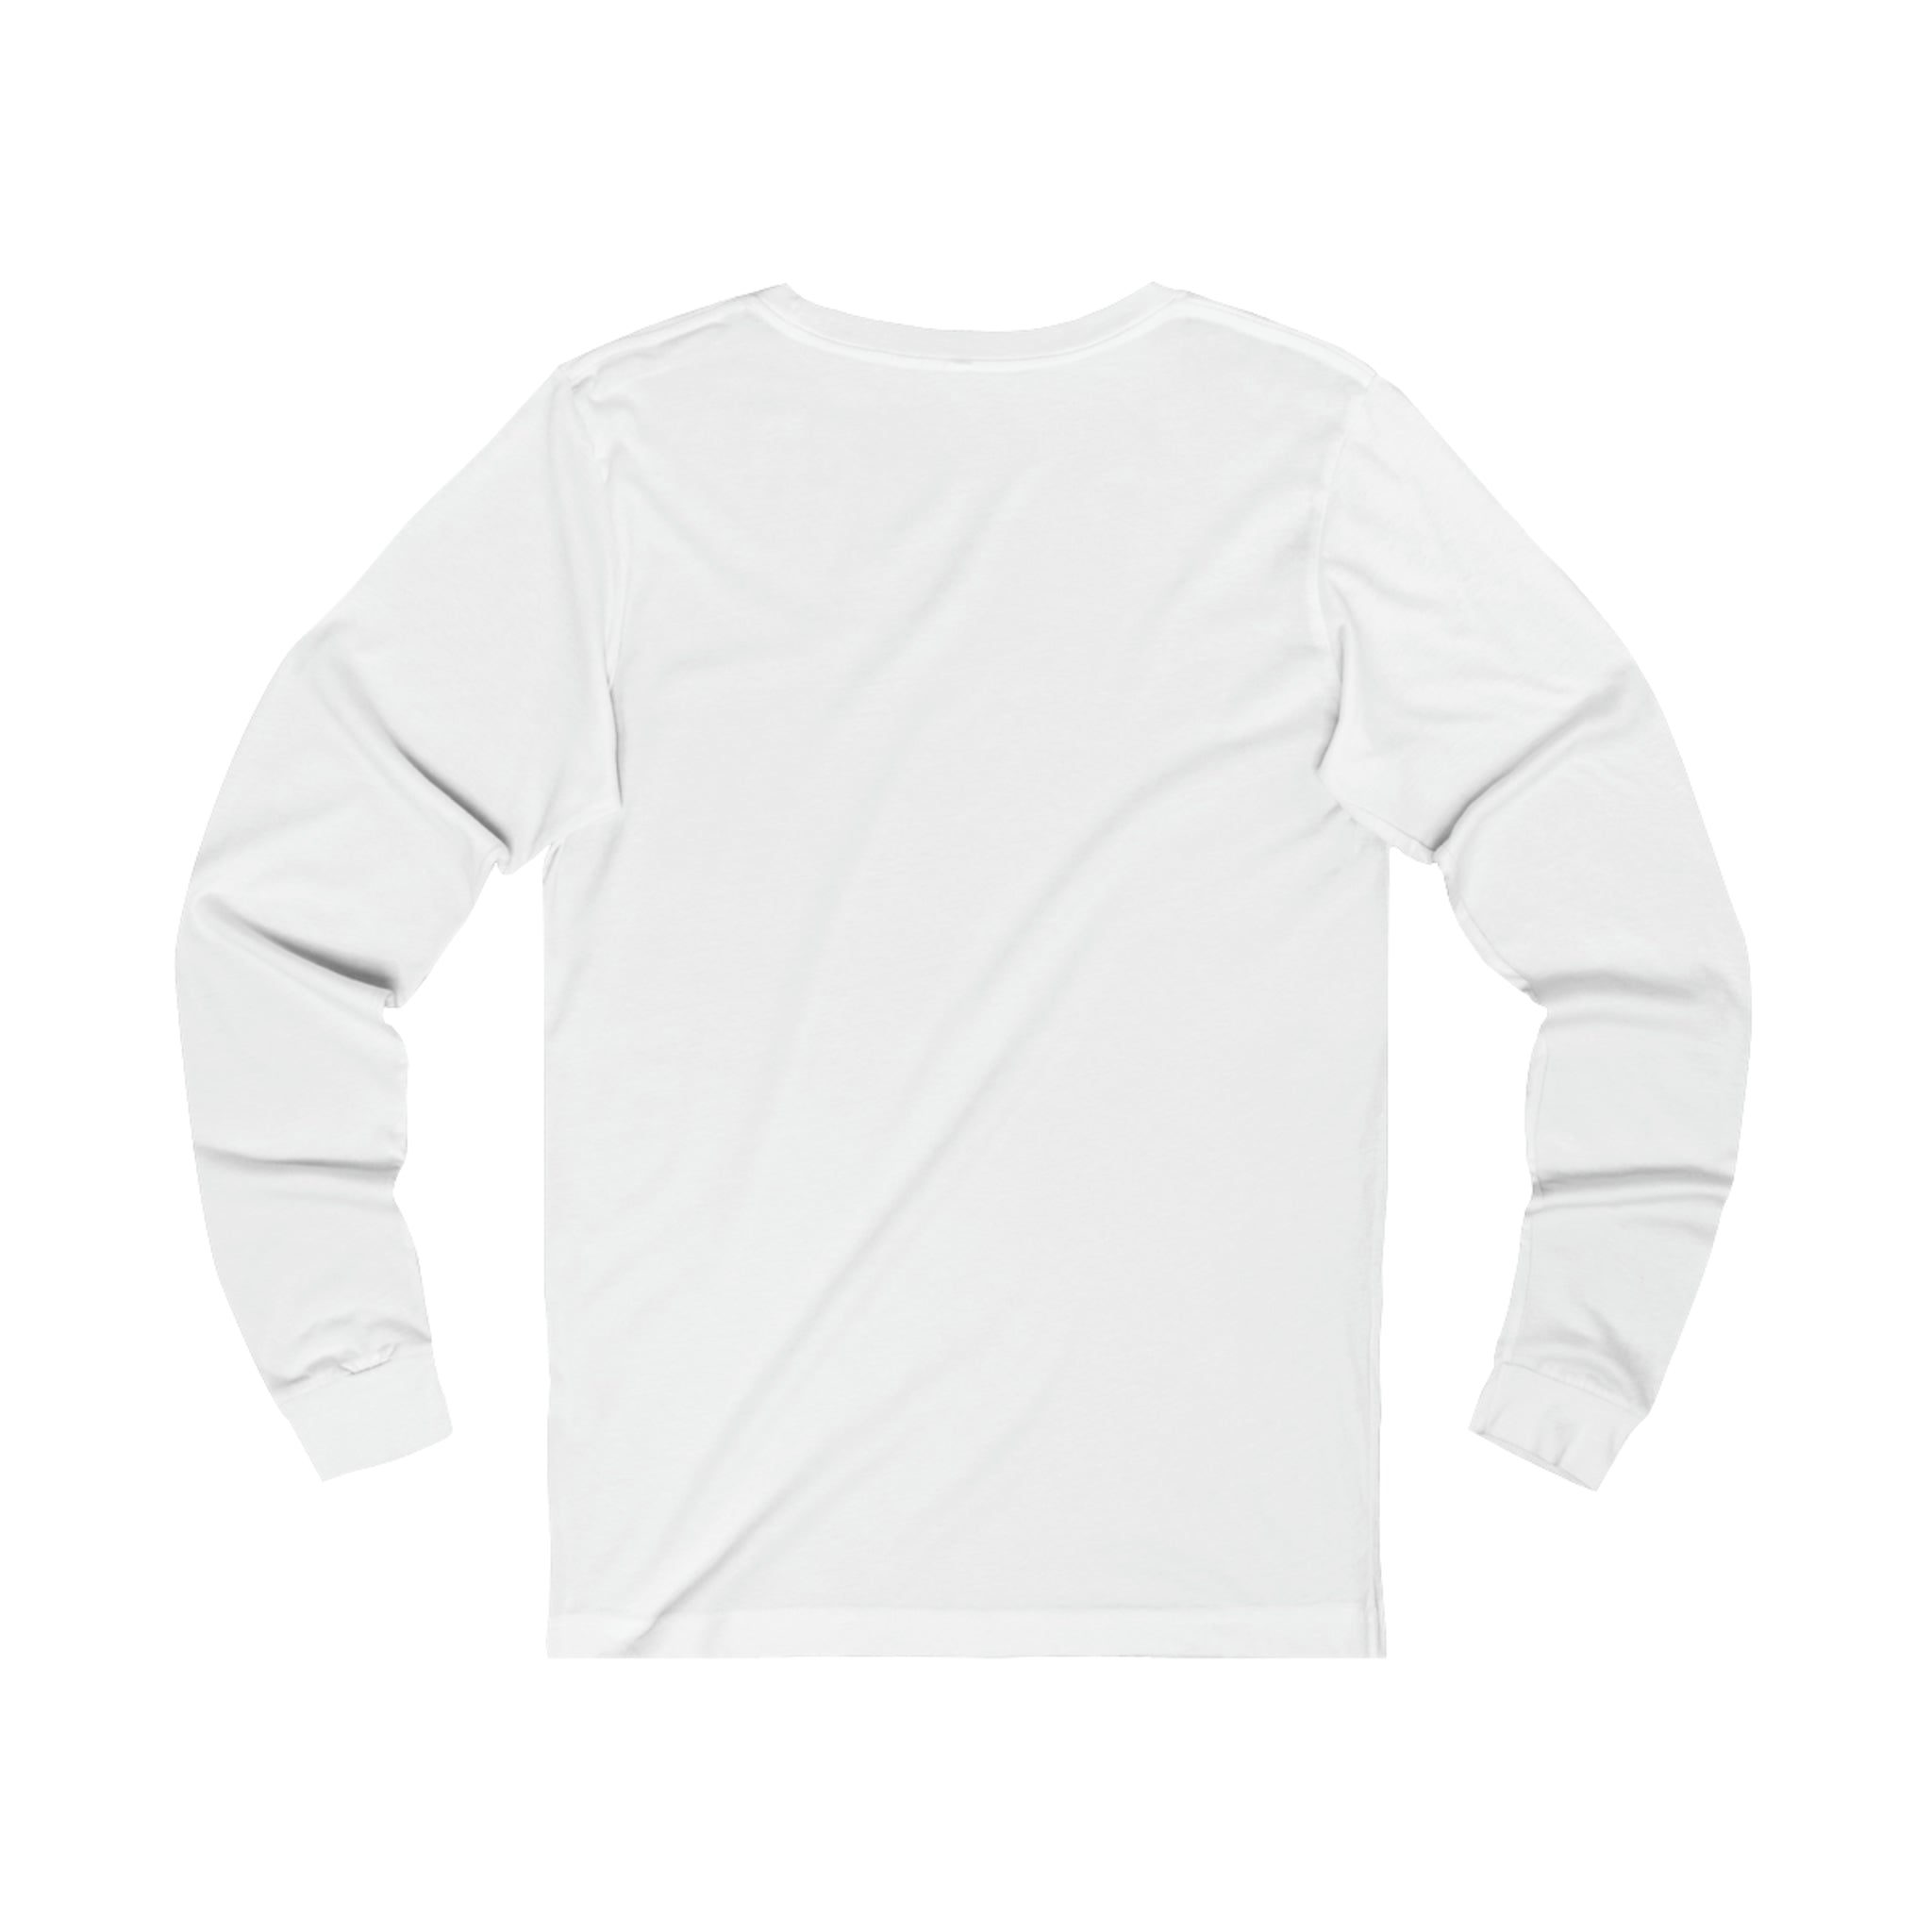 Self- Love Club Unisex Jersey Long Sleeve T-Shirt